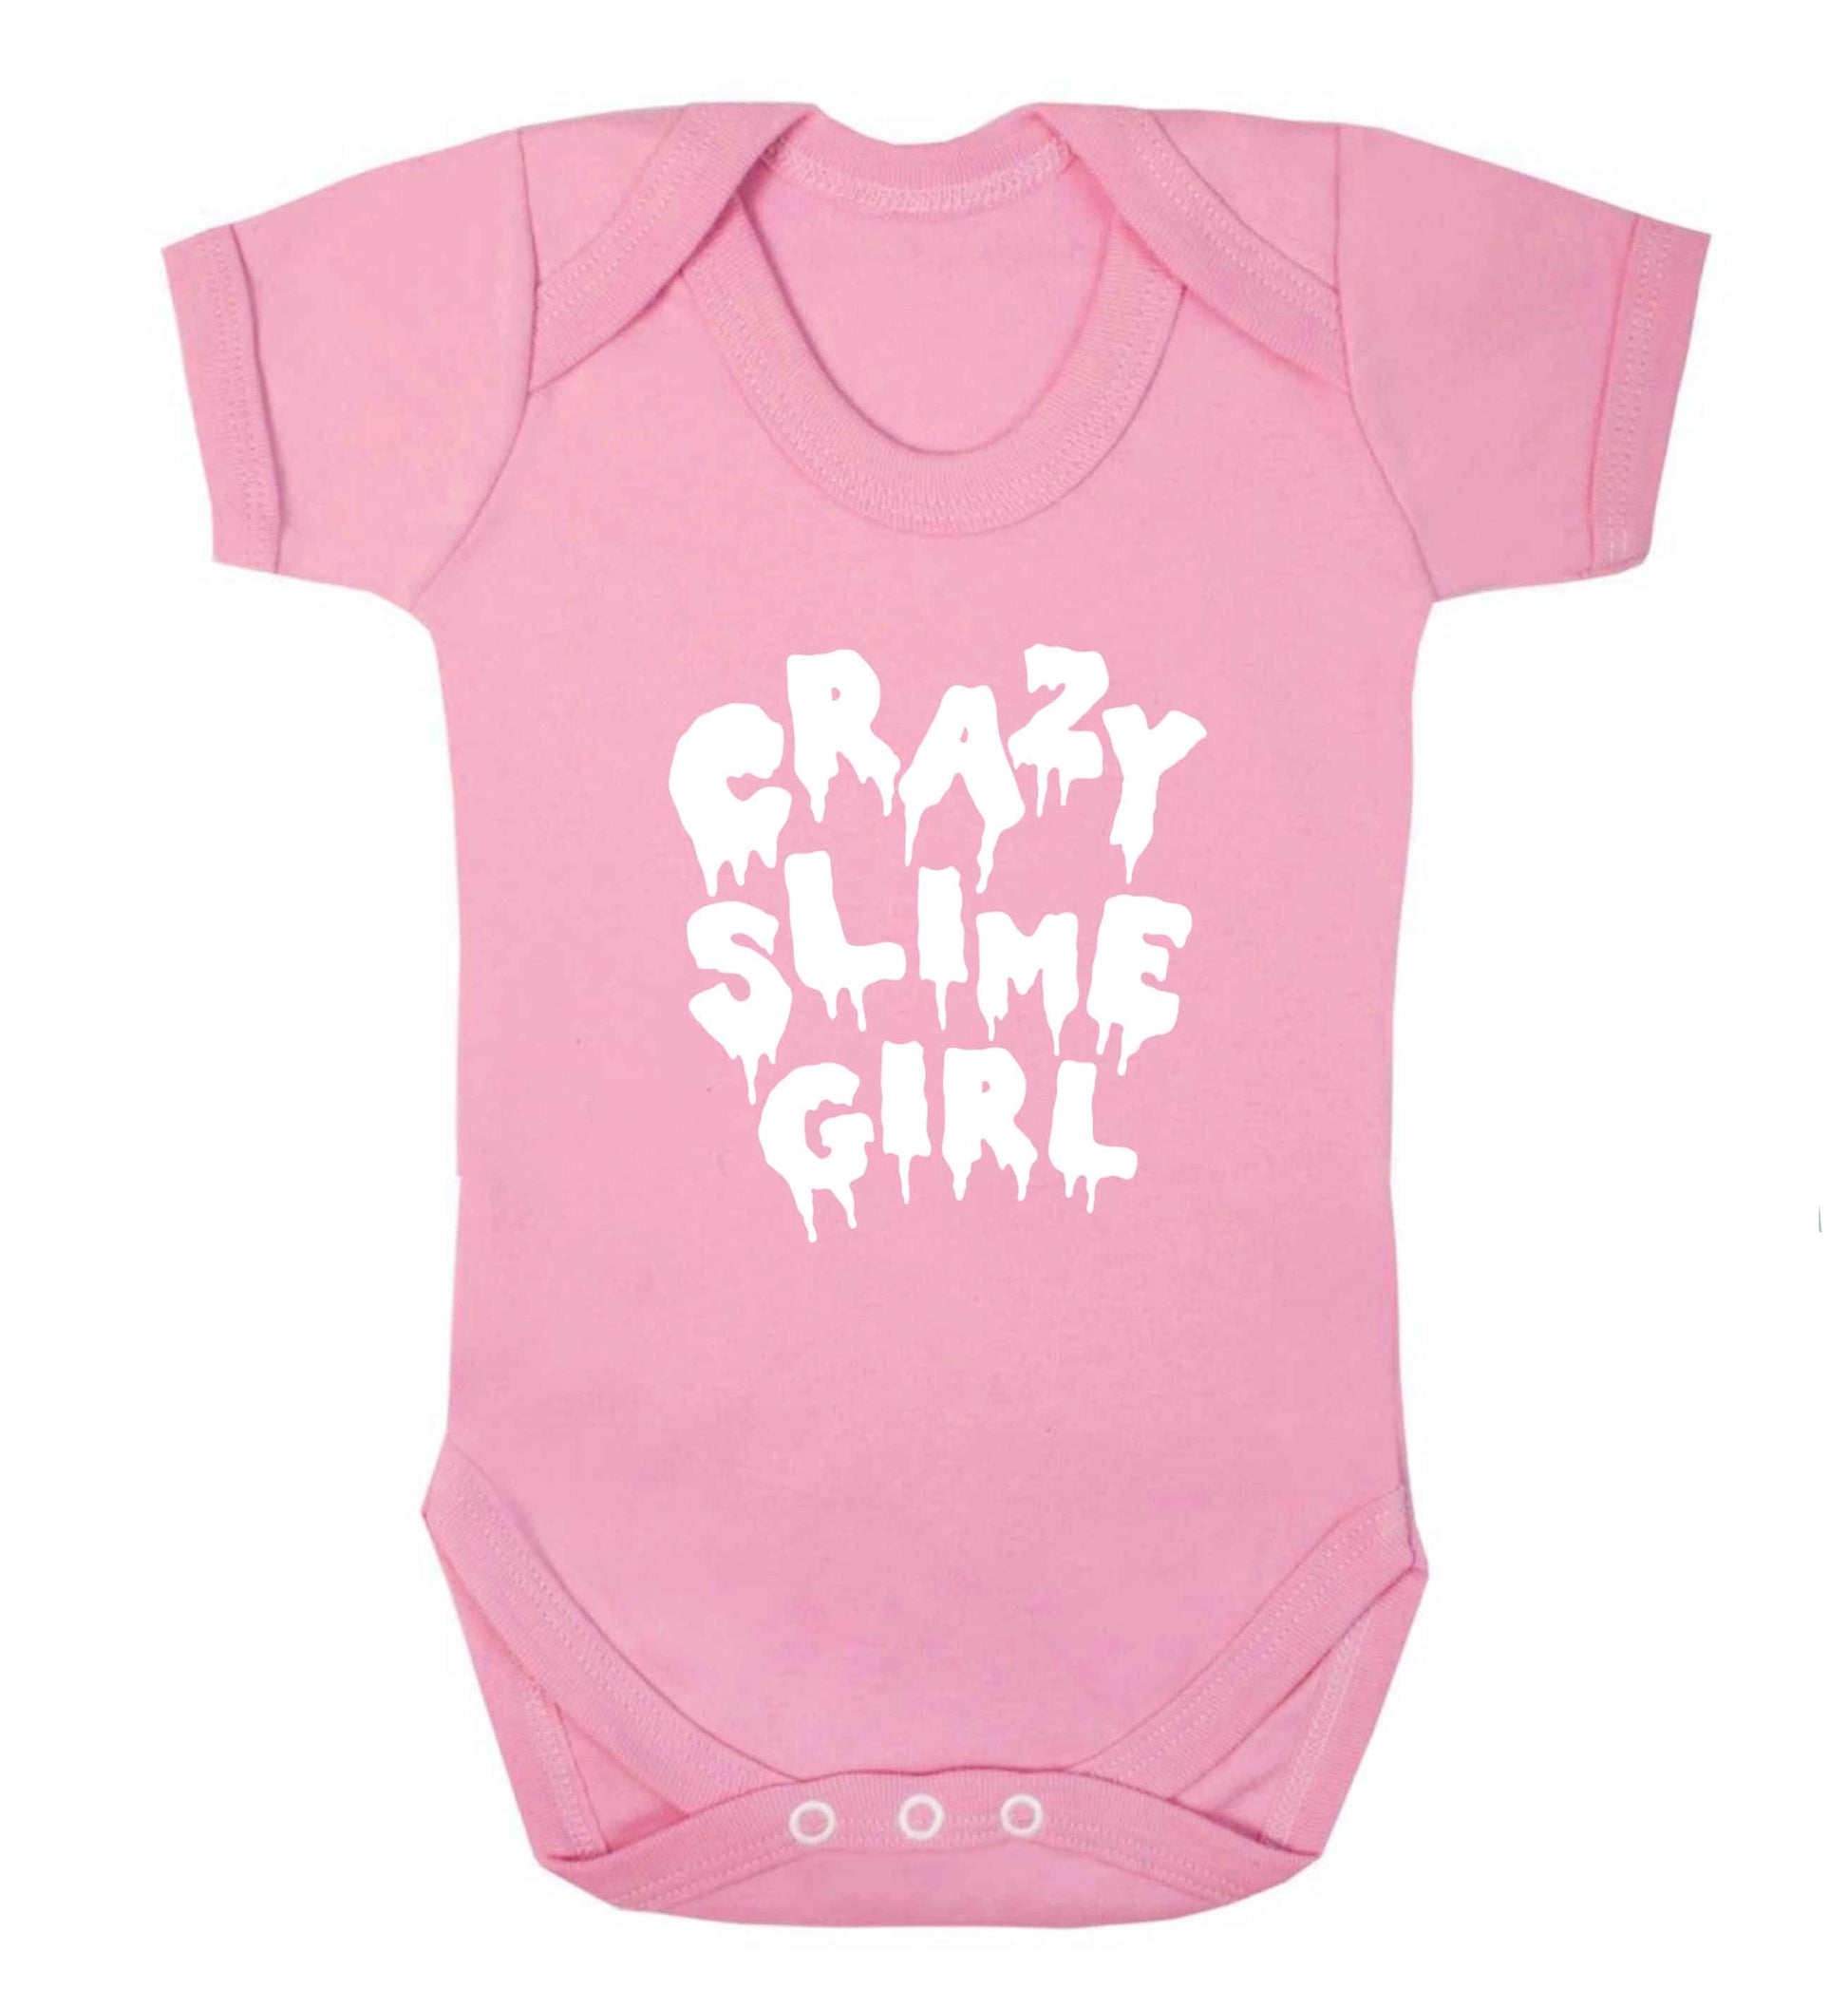 Crazy slime girl baby vest pale pink 18-24 months